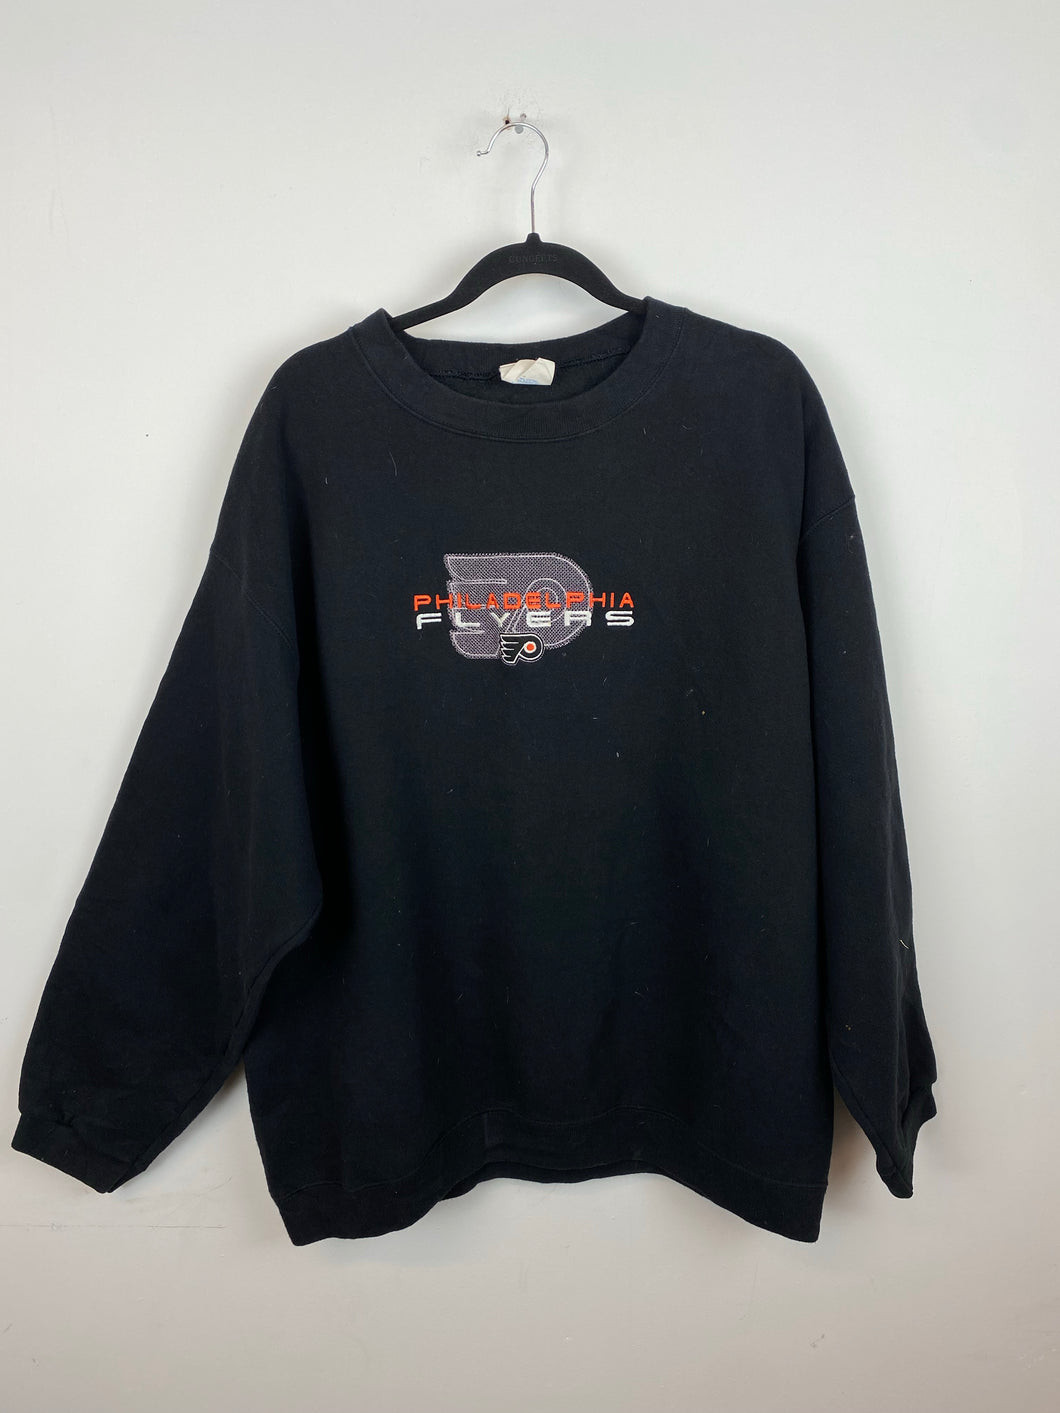 90s Embroidered Philadelphia Flyers crewneck - L